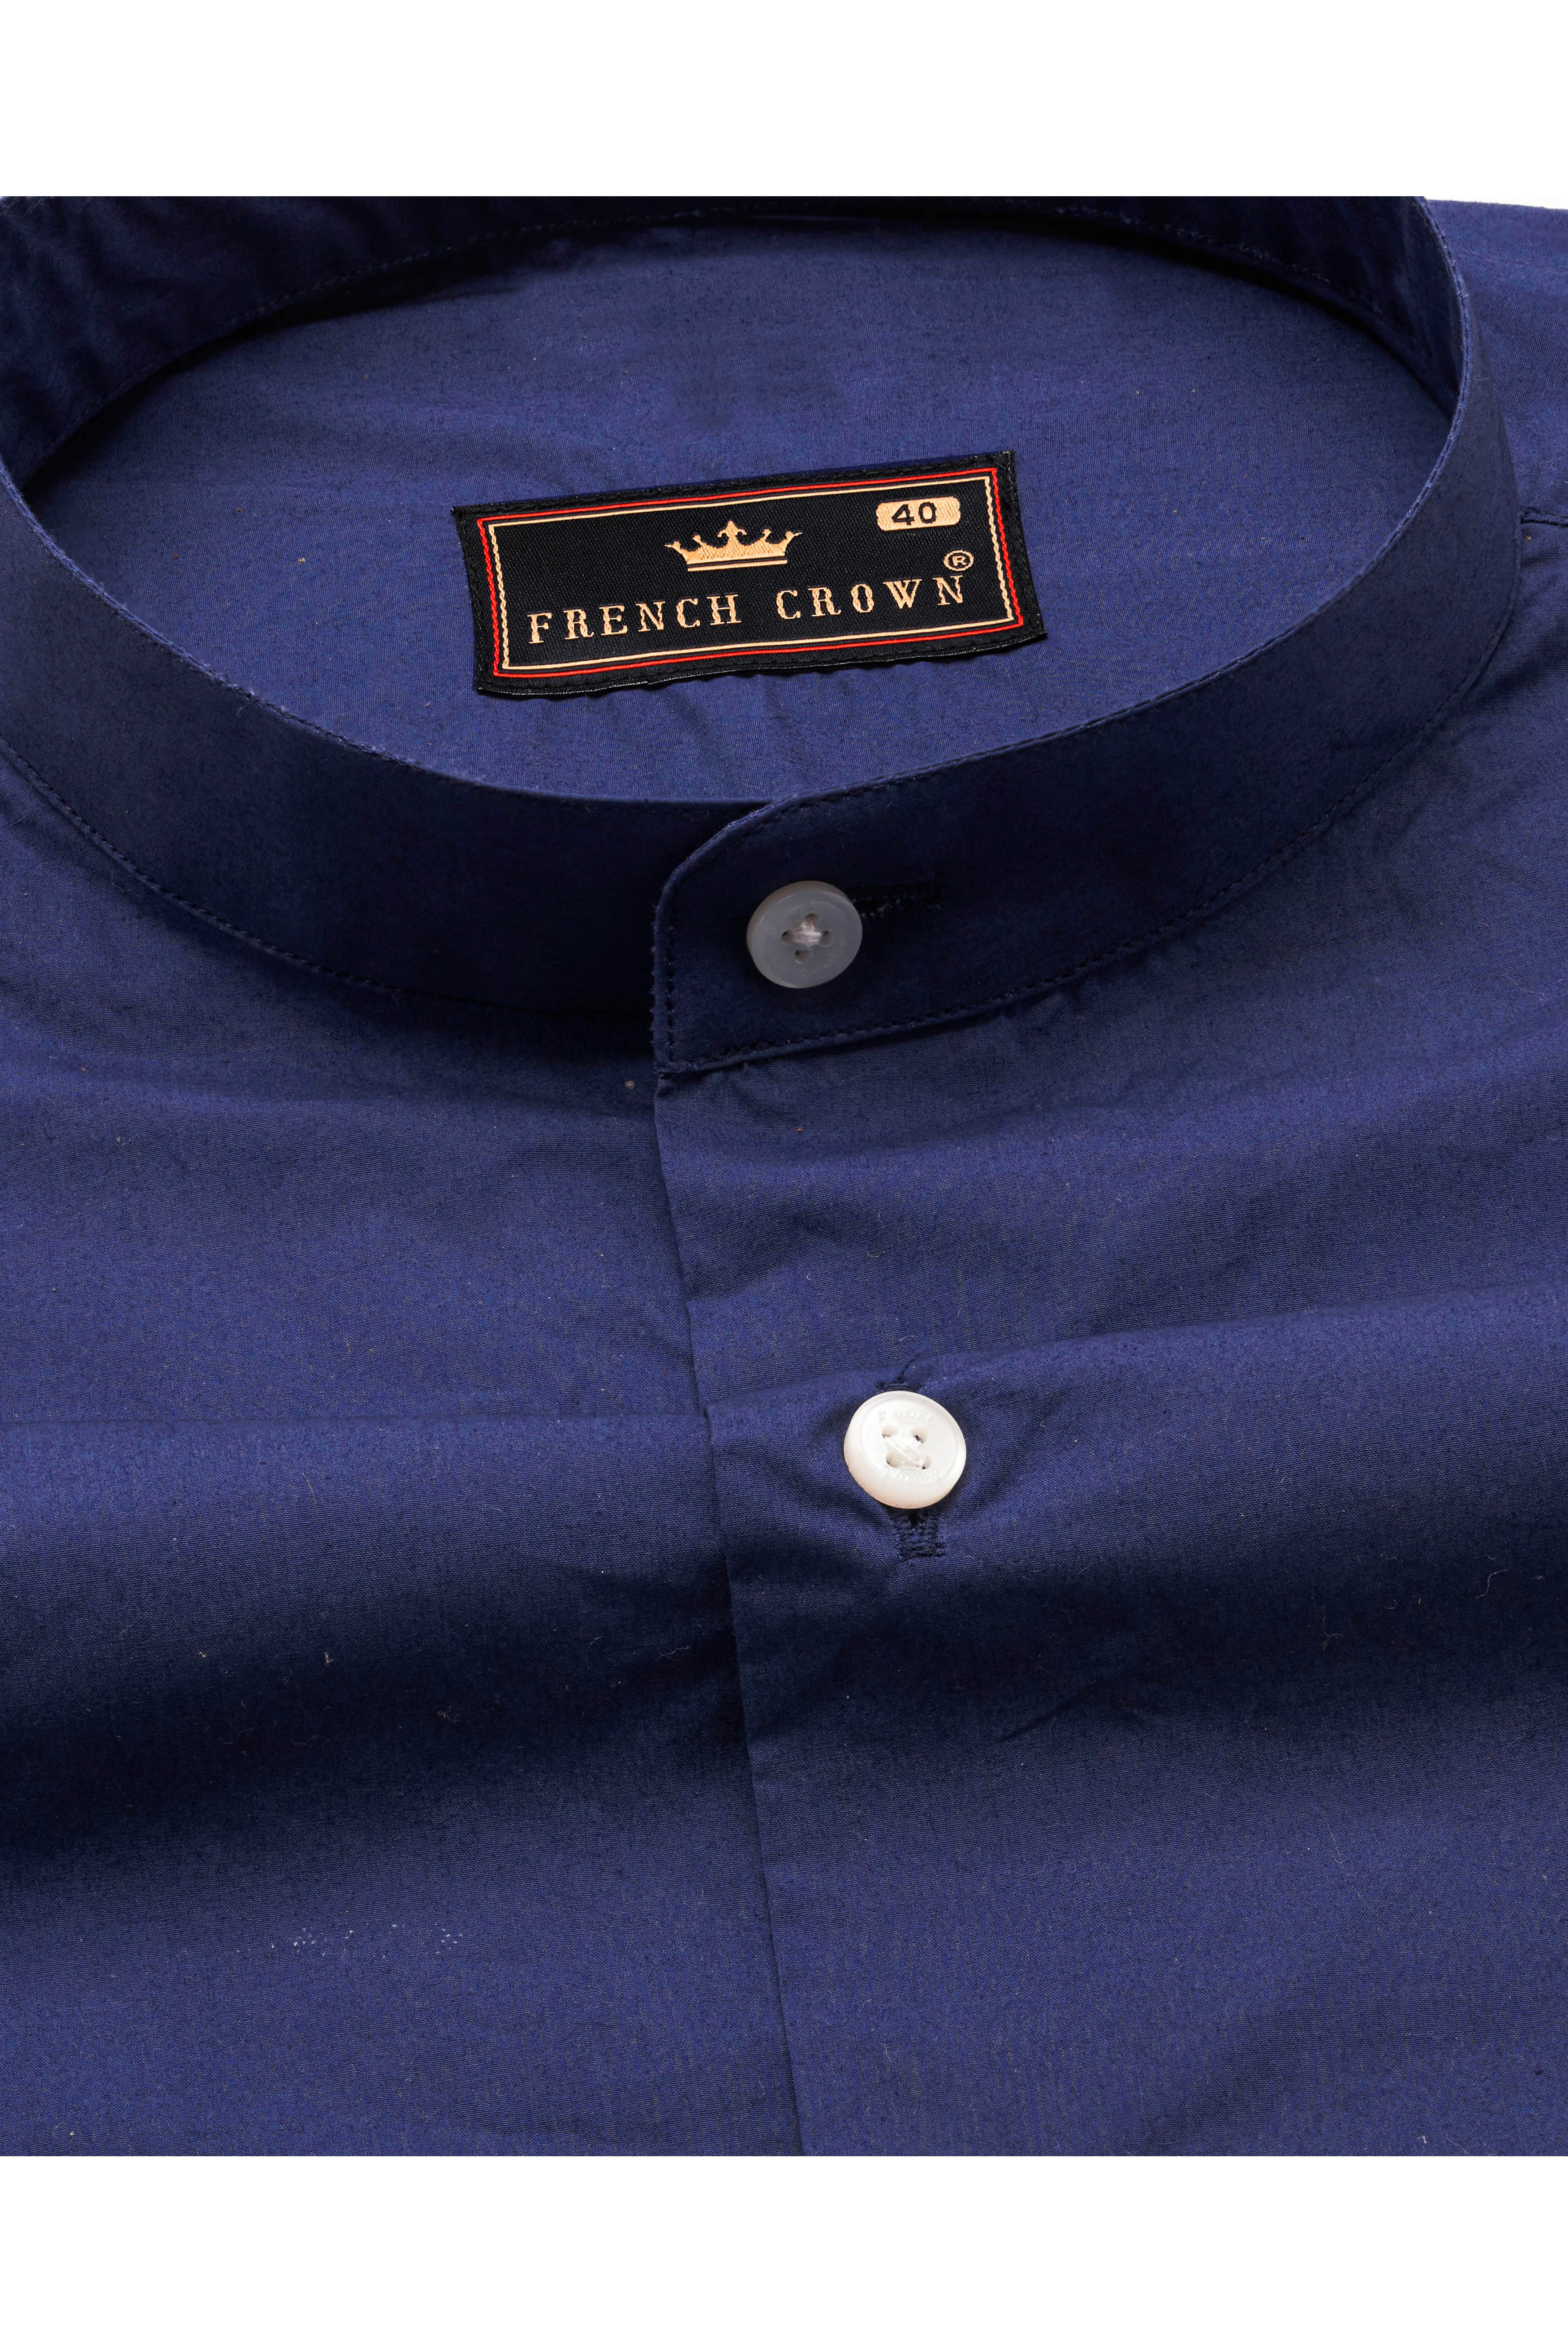 Gunmetal Blue Premium Cotton Shirt